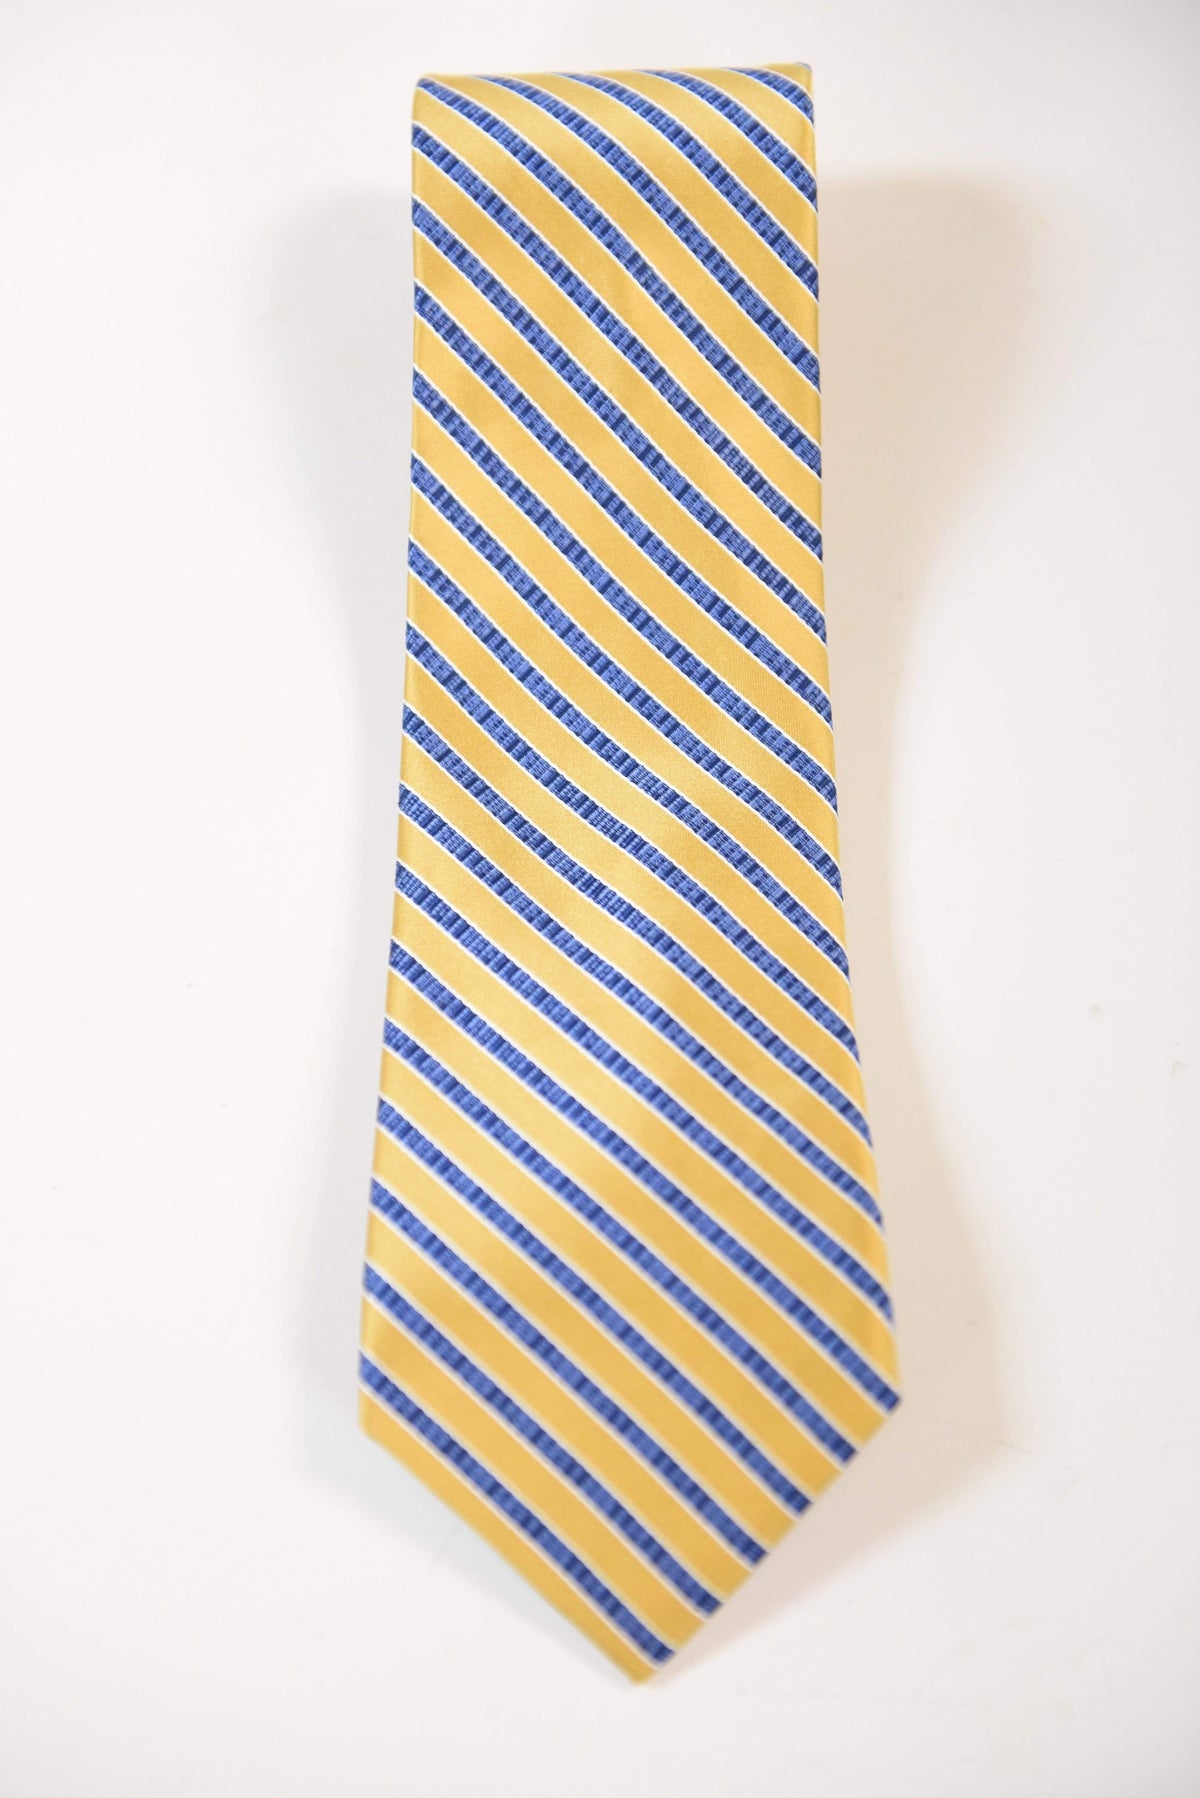 The Suit Depot Gold Stripe Arthur Black Premium Silk Tie